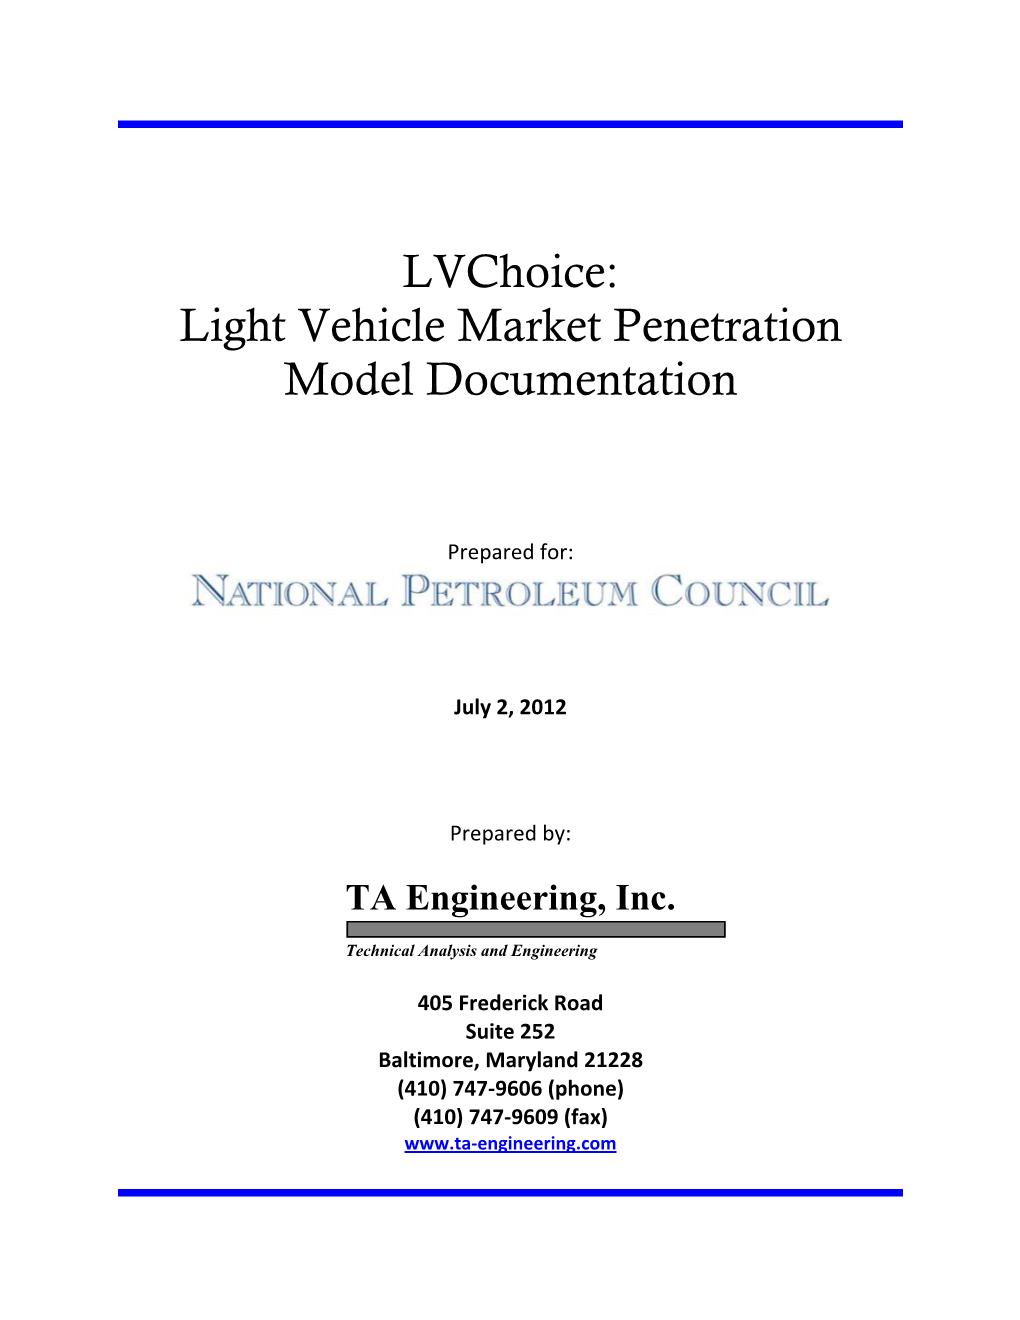 Lvchoice: Light Vehicle Market Penetration Model Documentation